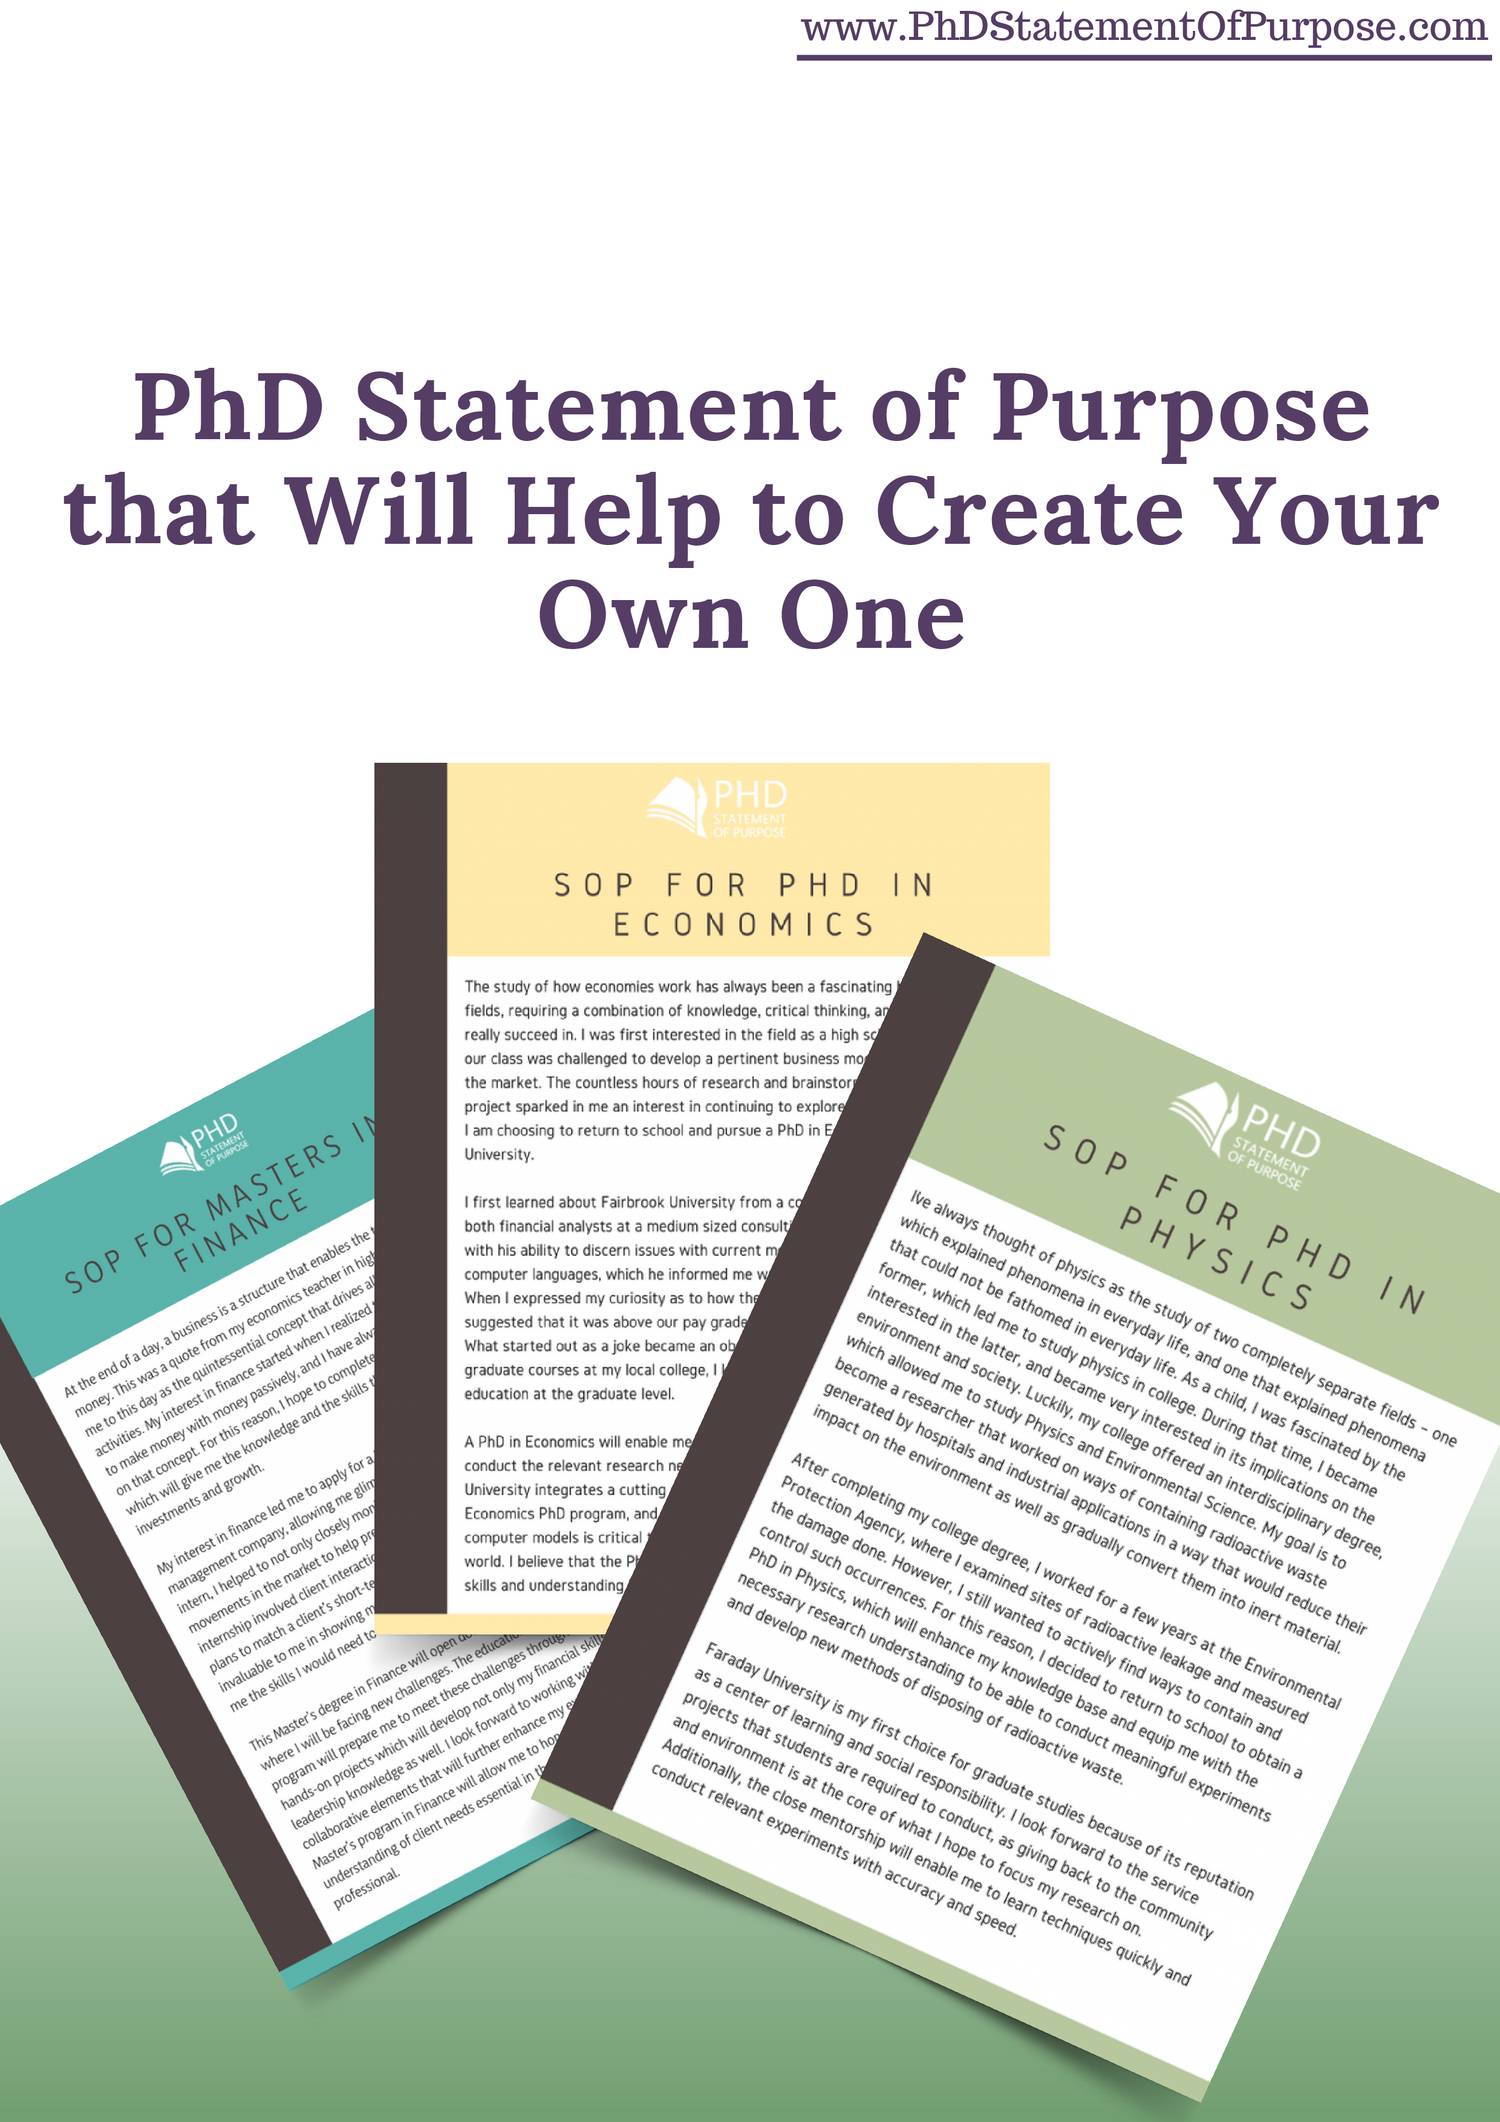 purpose of a phd degree